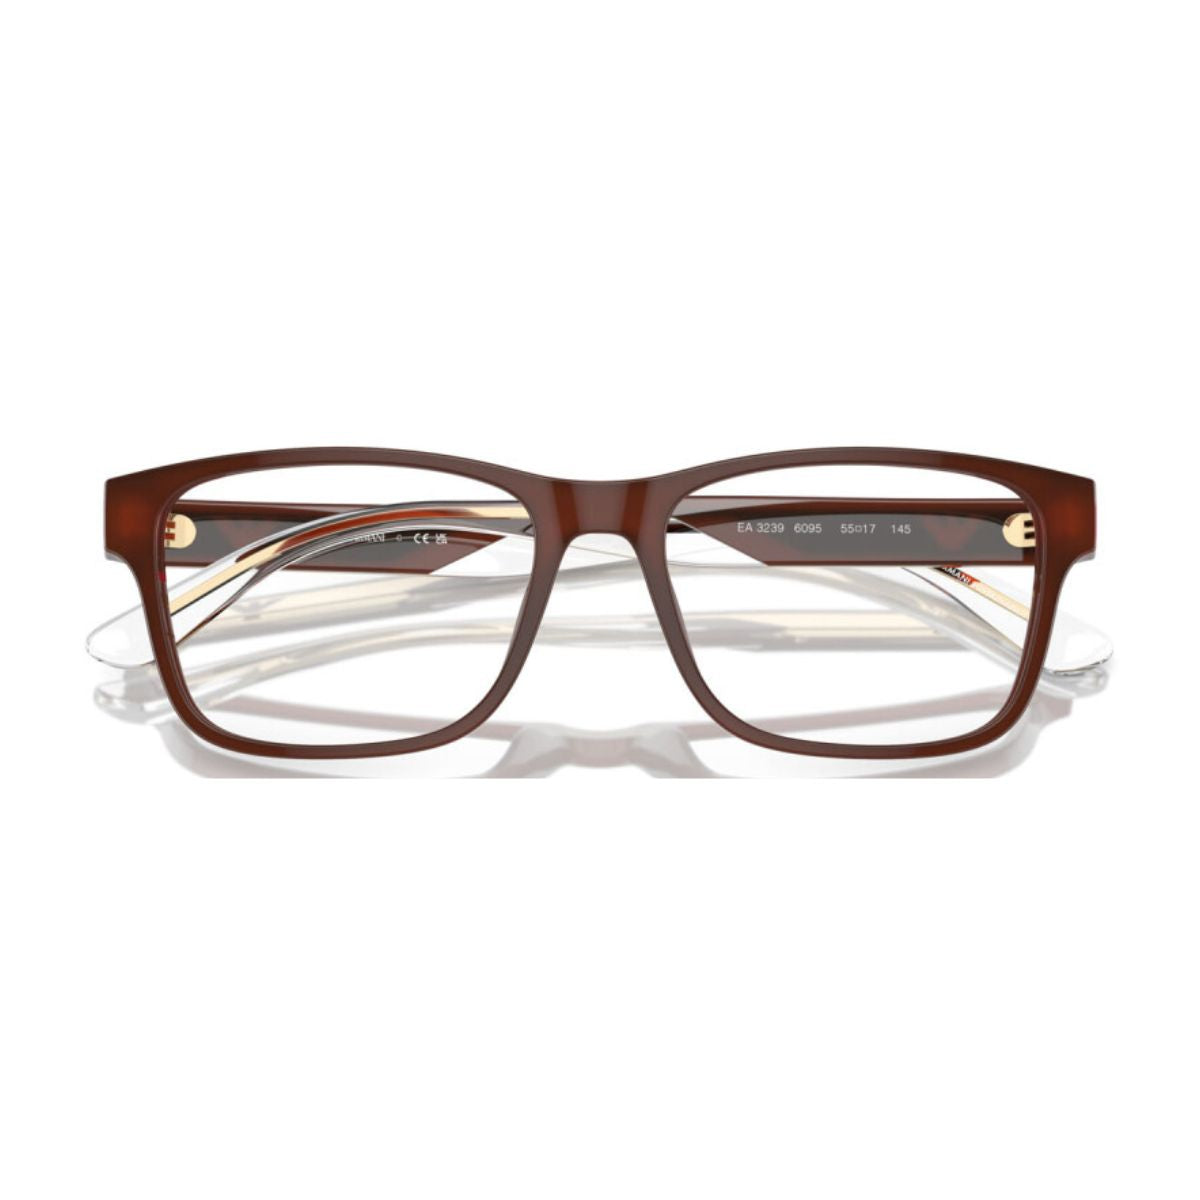 "Emporio Armani 3239 6095 Optical Eyeglass Frame For Men's At Optorium"